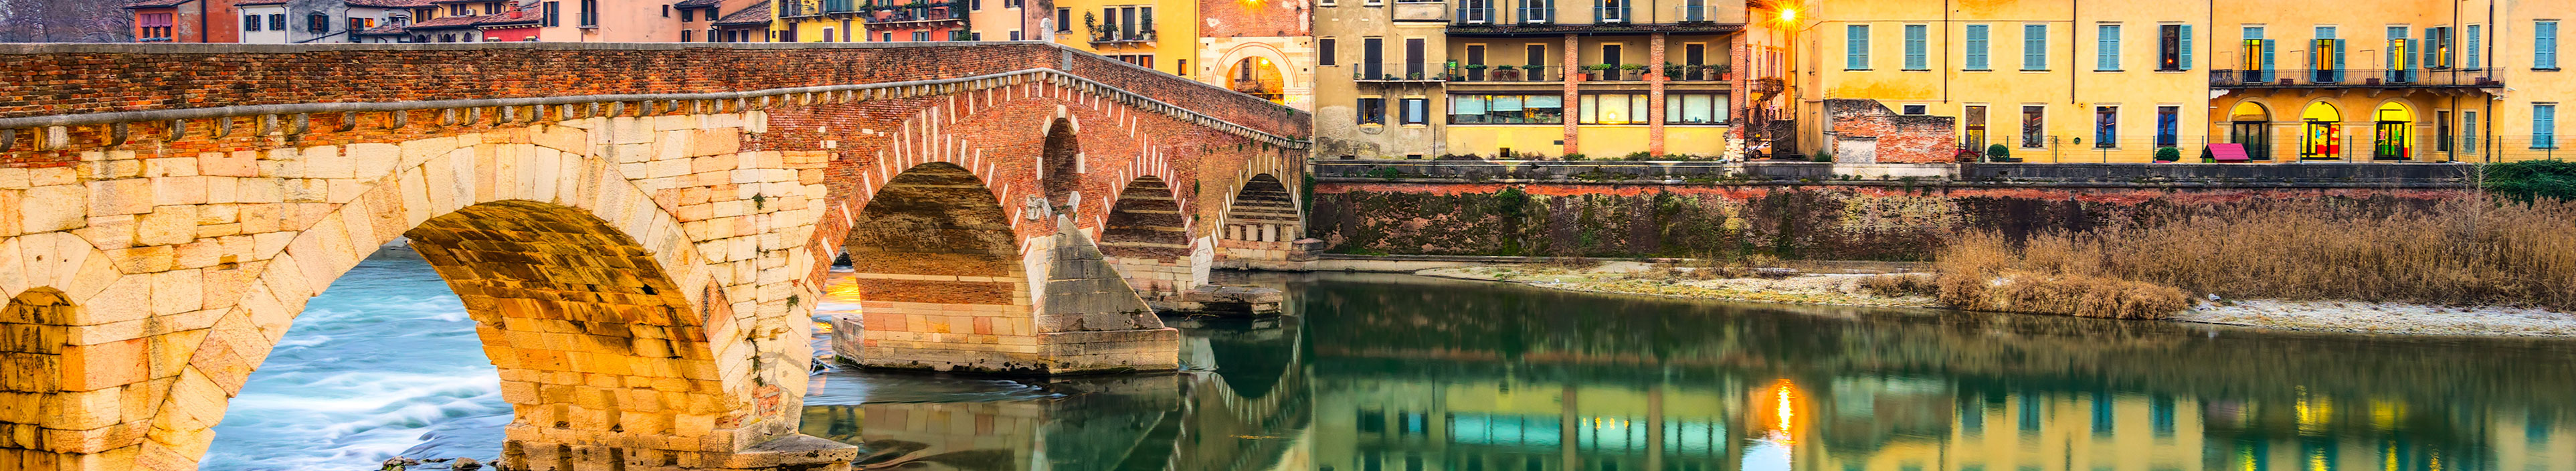 Ponte di Pietra in Verona